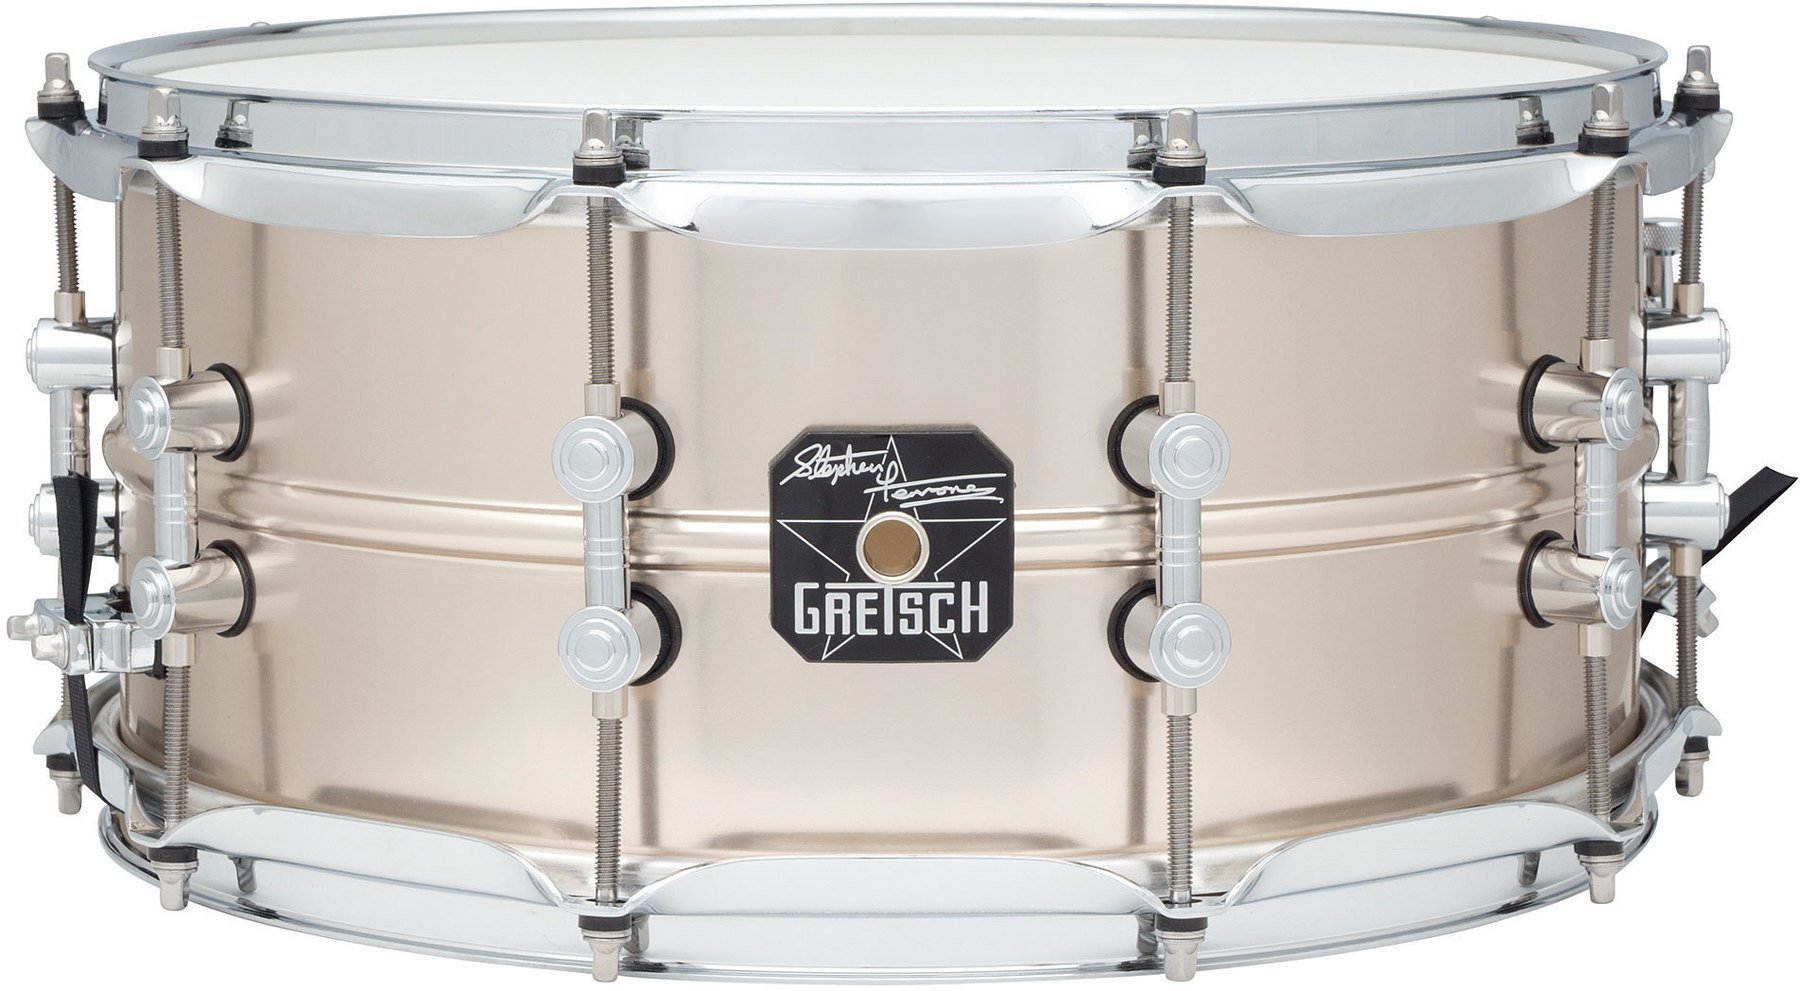 Signature snare bubínek Gretsch Drums S1-6514A-SF Steve Ferrone 14" Gold